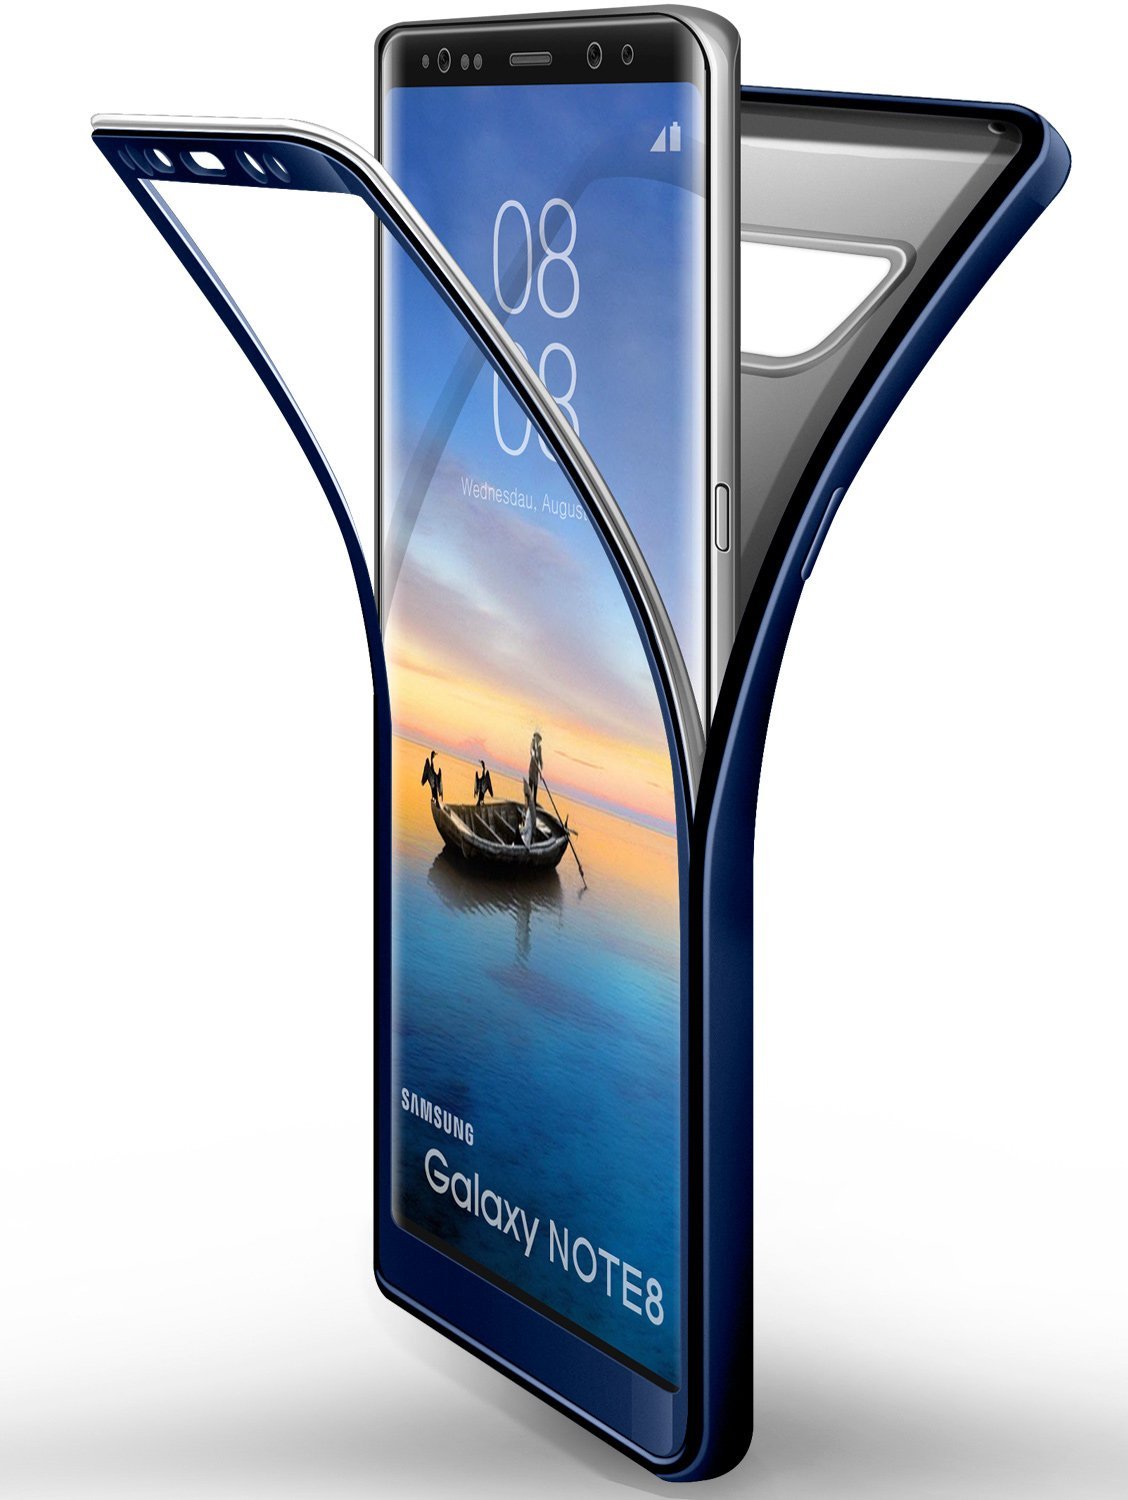 Coque pour Galaxy Note 8 Bleu , Coque Samsung Galaxy Note 8 Housse Etui TPU Silicone Couqe pour Samsung Galaxy Note 8 Etui